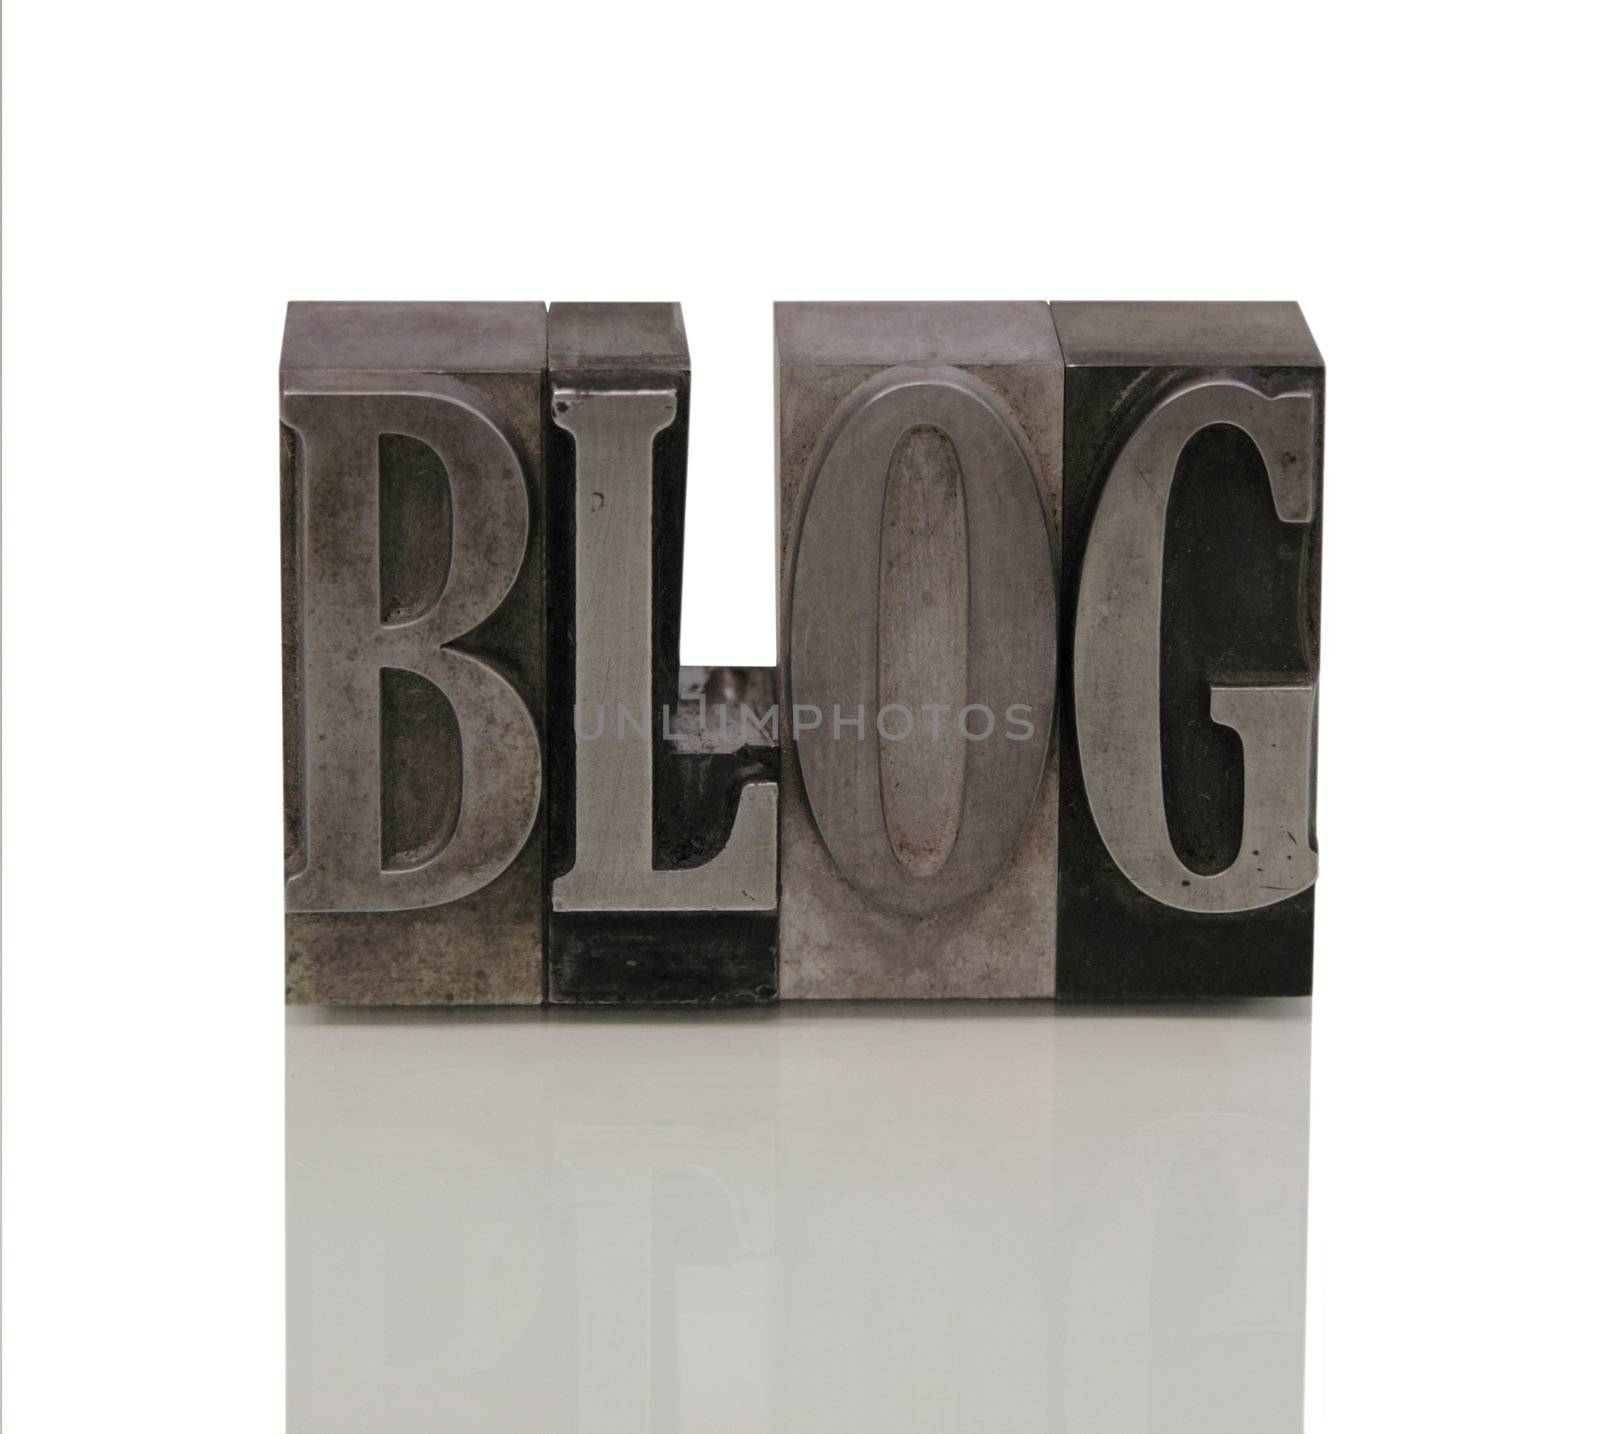 blog in metal letterpress type by nebari